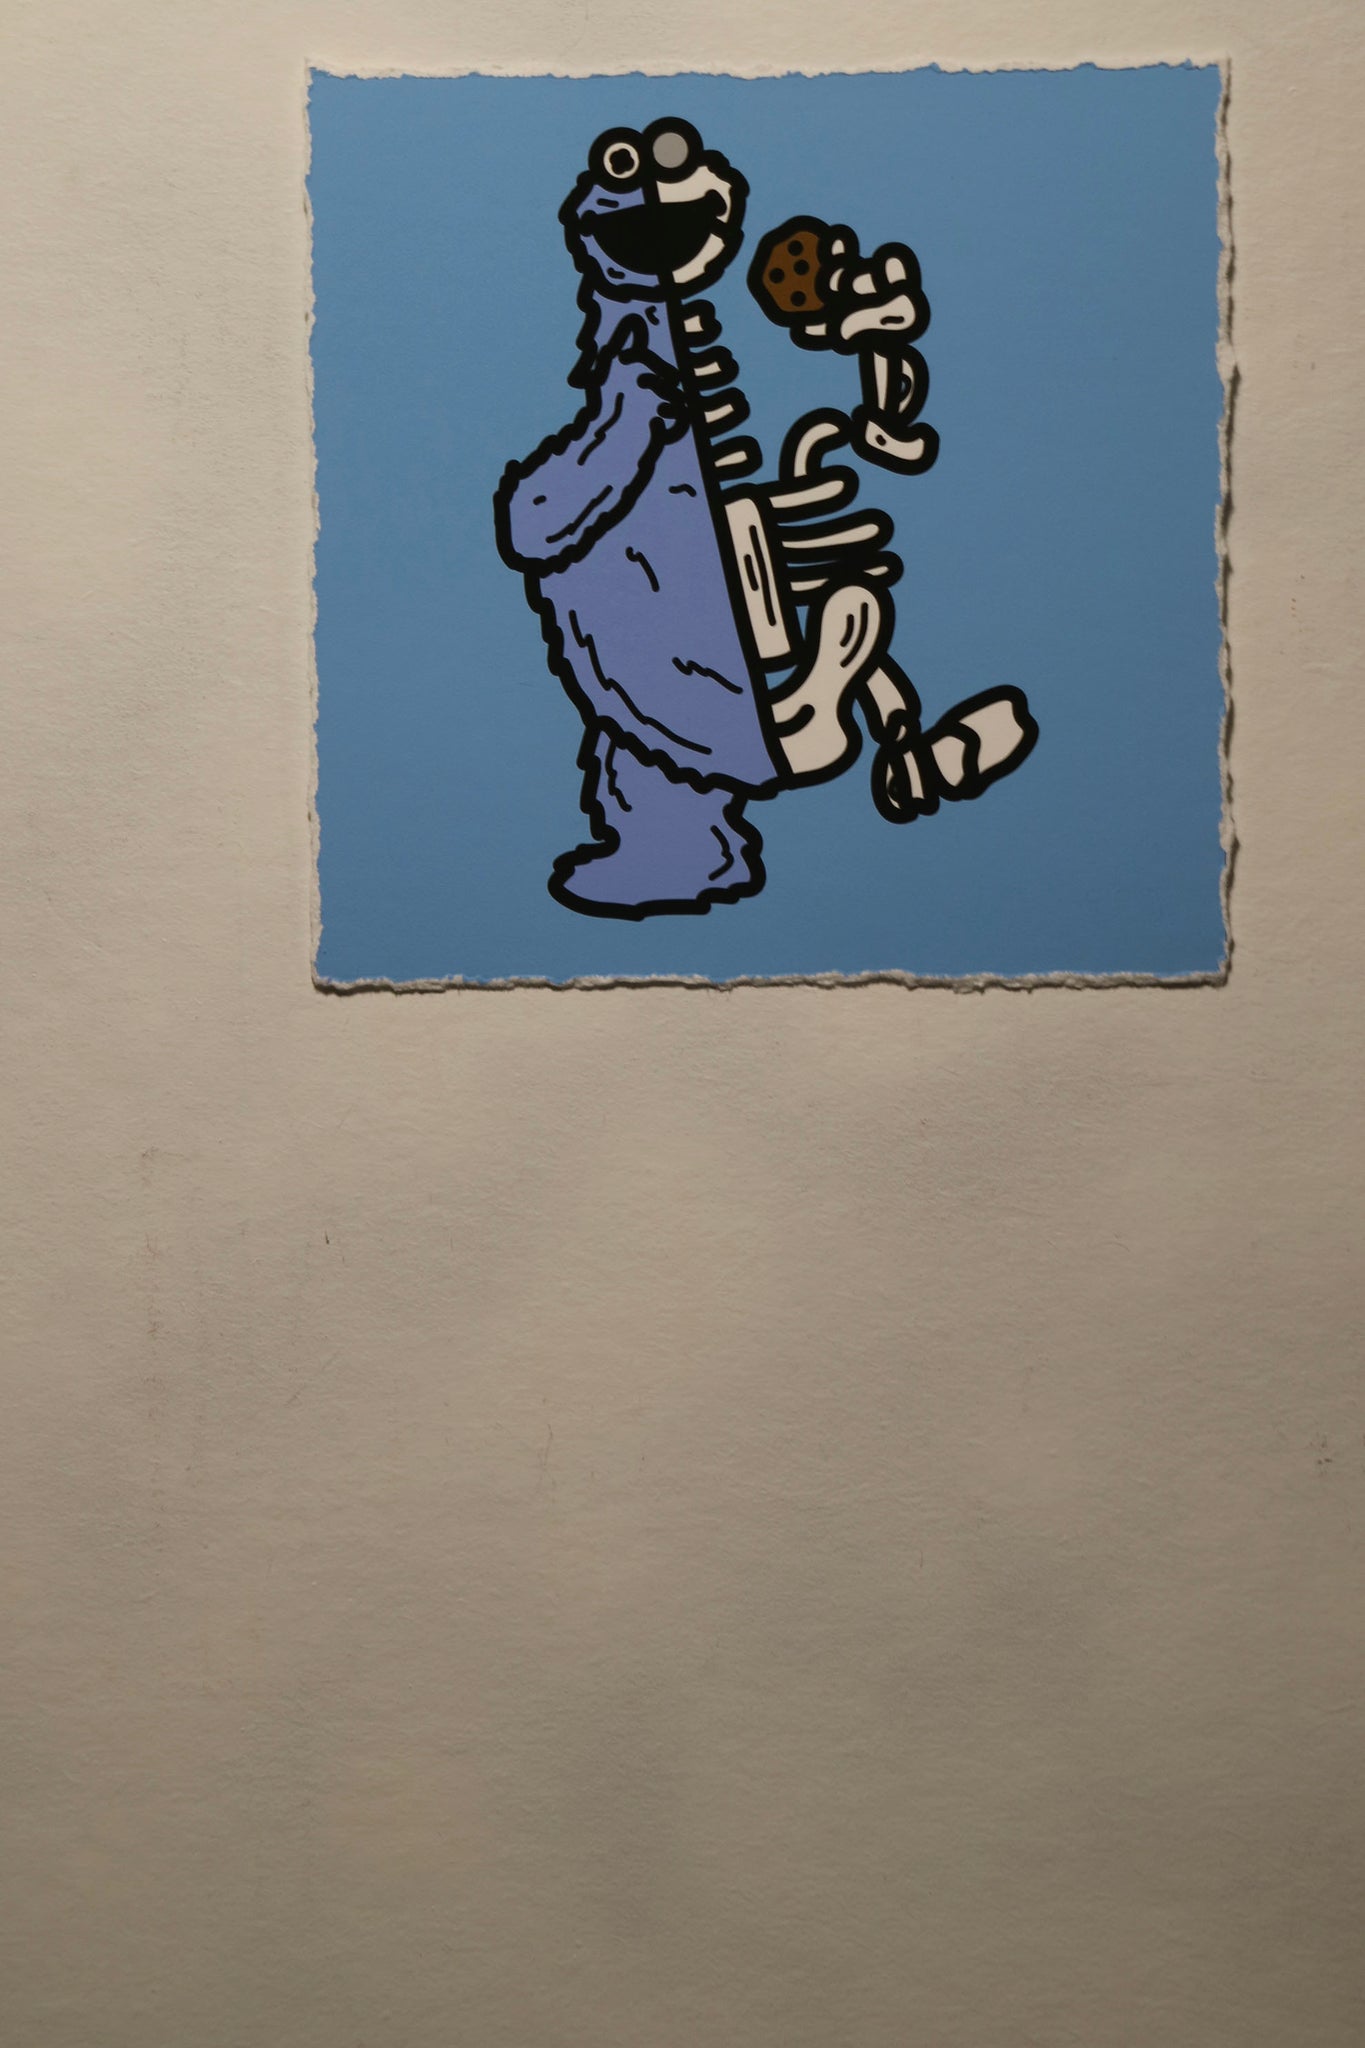 Half Skeleton Cookie Monster (6x6) Giclee Art Print